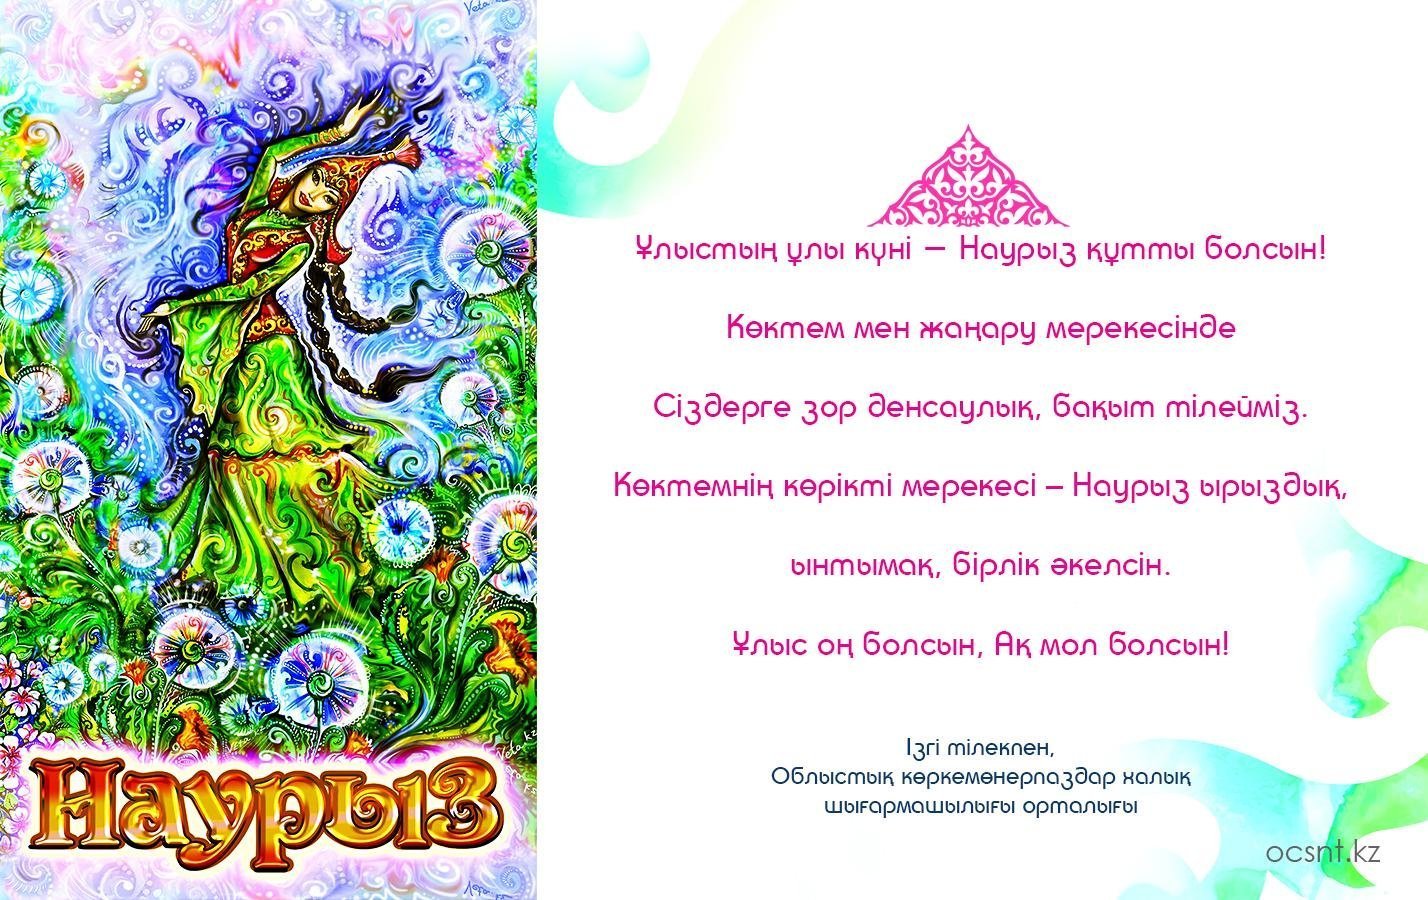 Пожелания на Наурыз на казахском языке